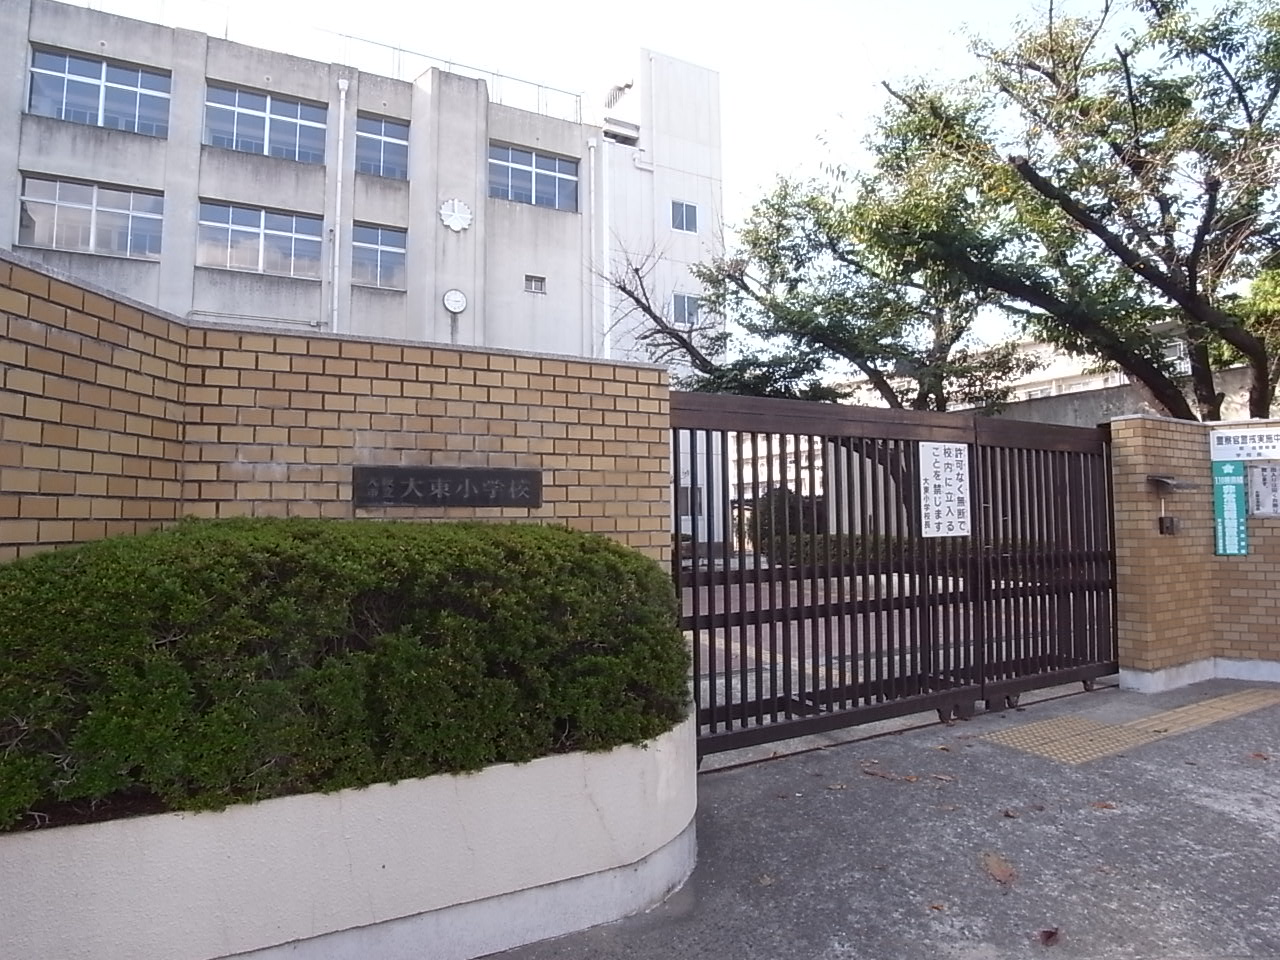 Primary school. Osakashiritsudai 700m to the east, elementary school (elementary school)